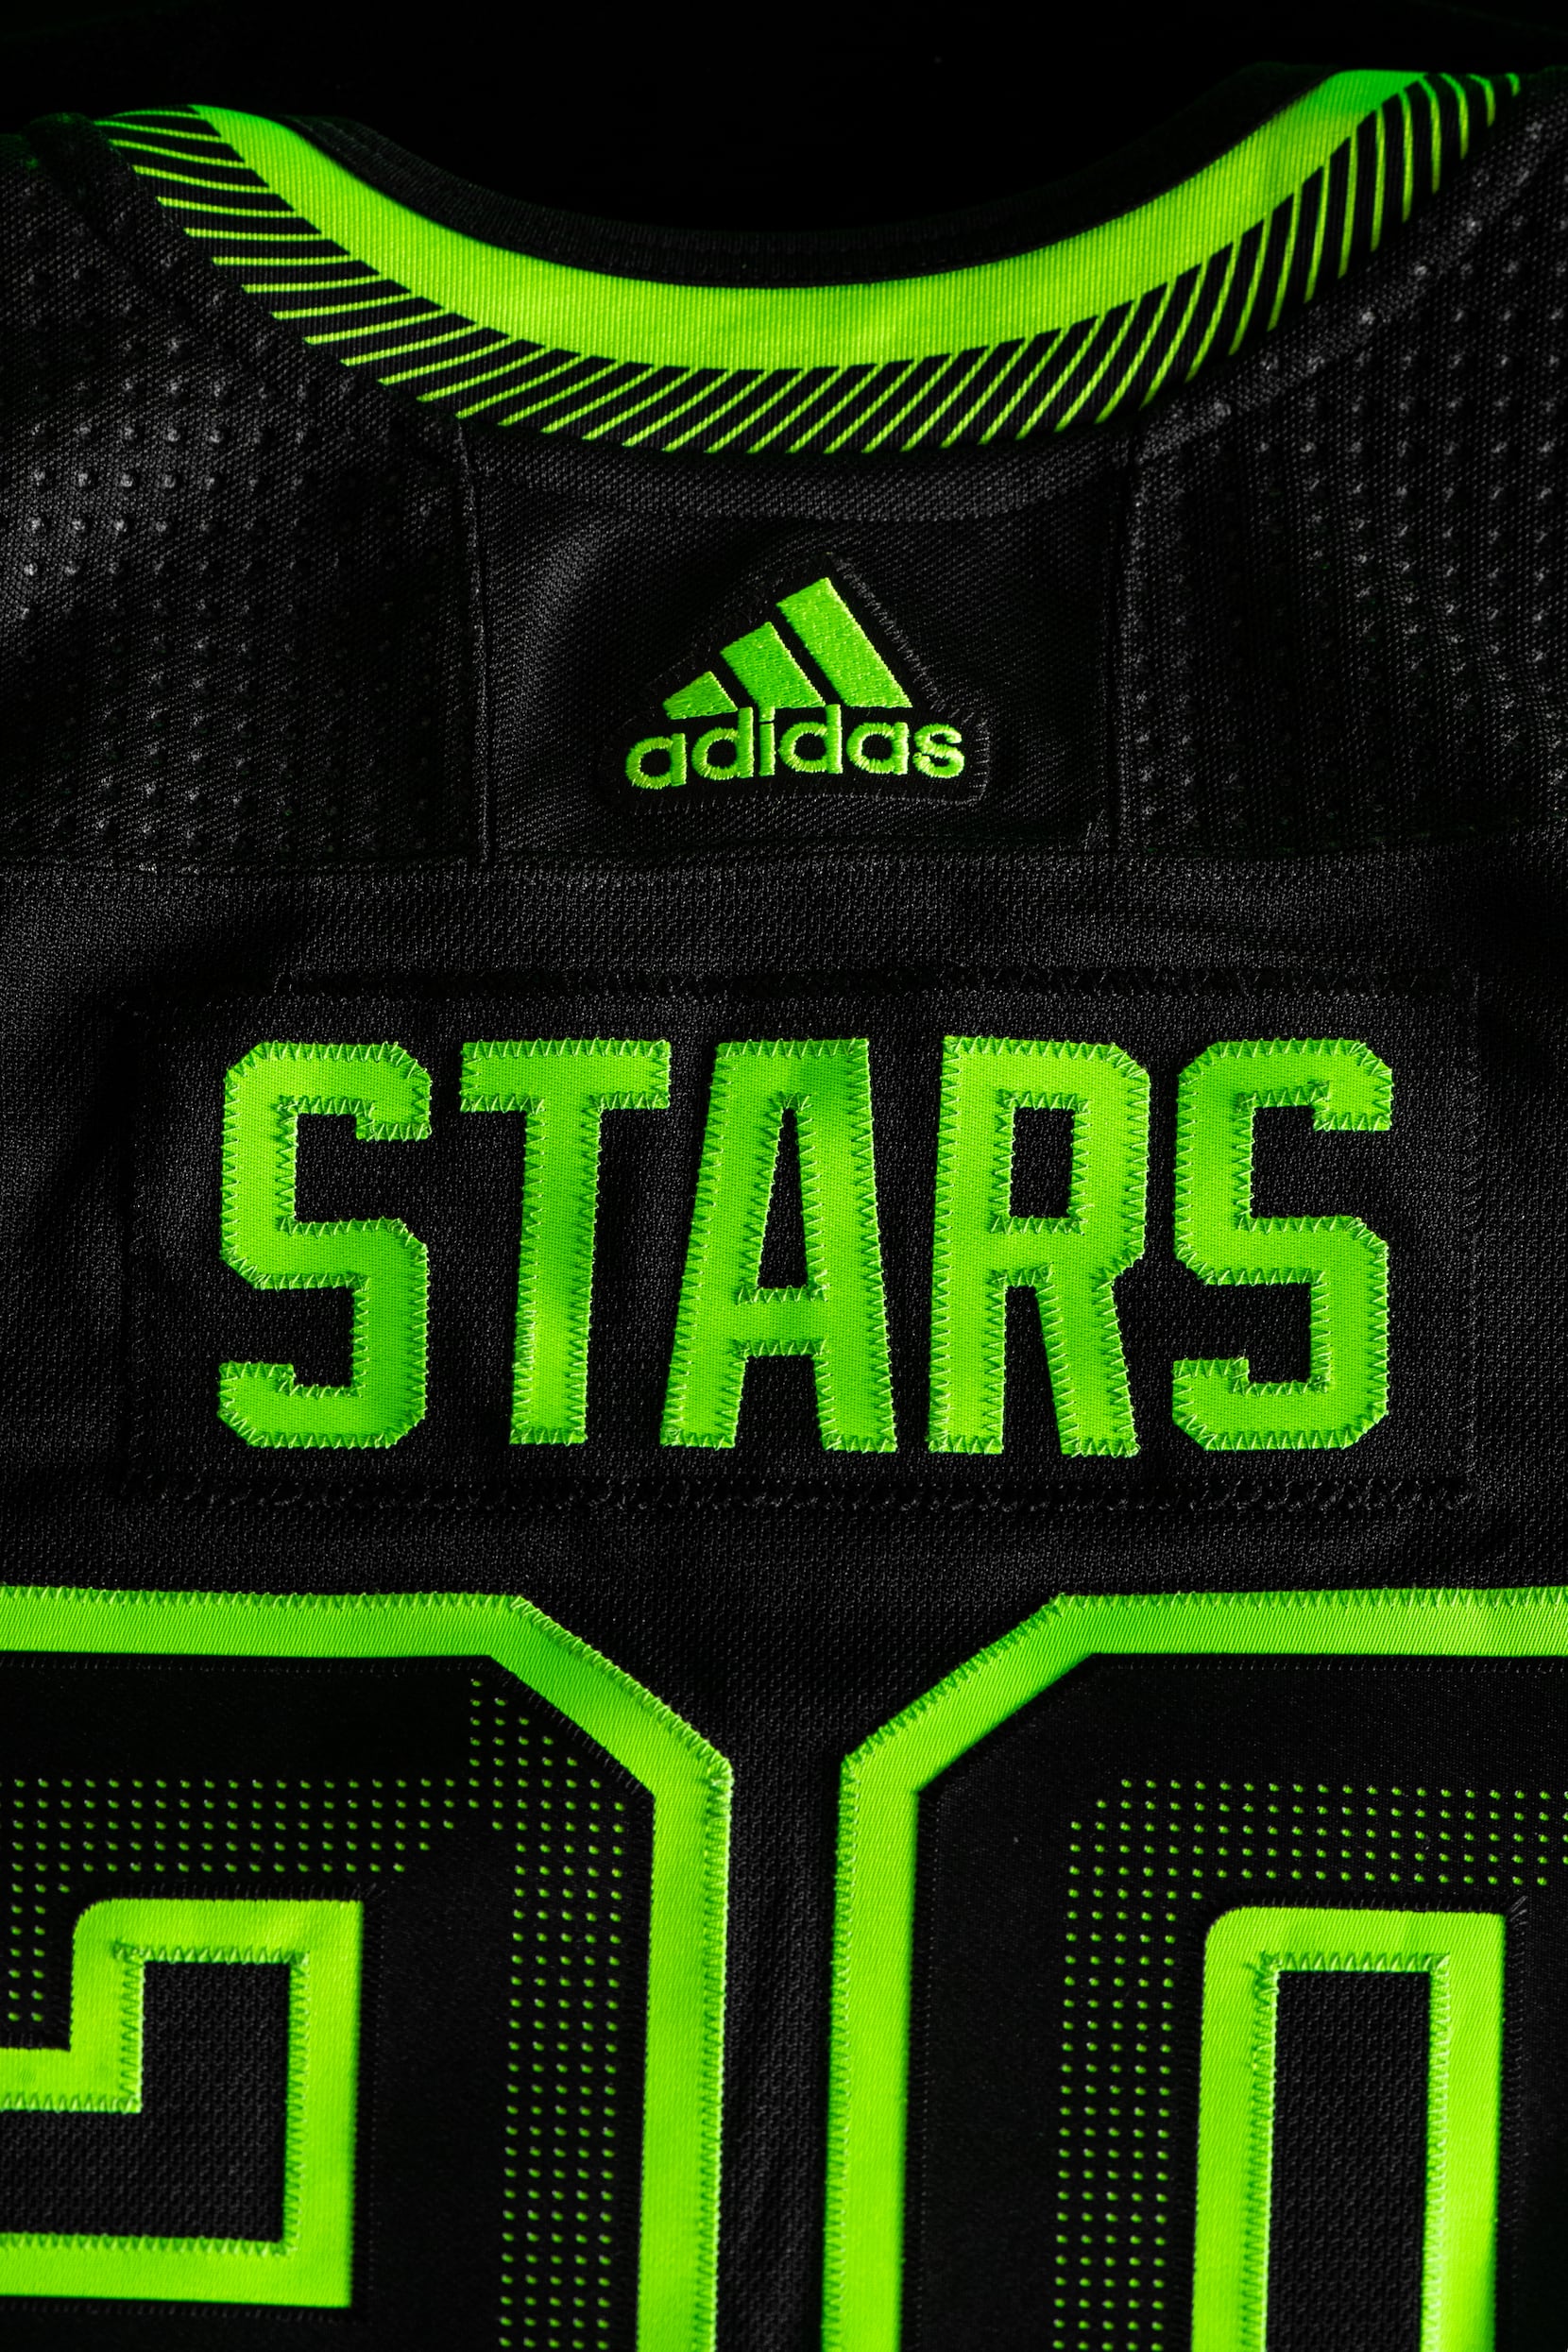 Reaction to Dallas Stars' neon alternate “blackout” uniforms